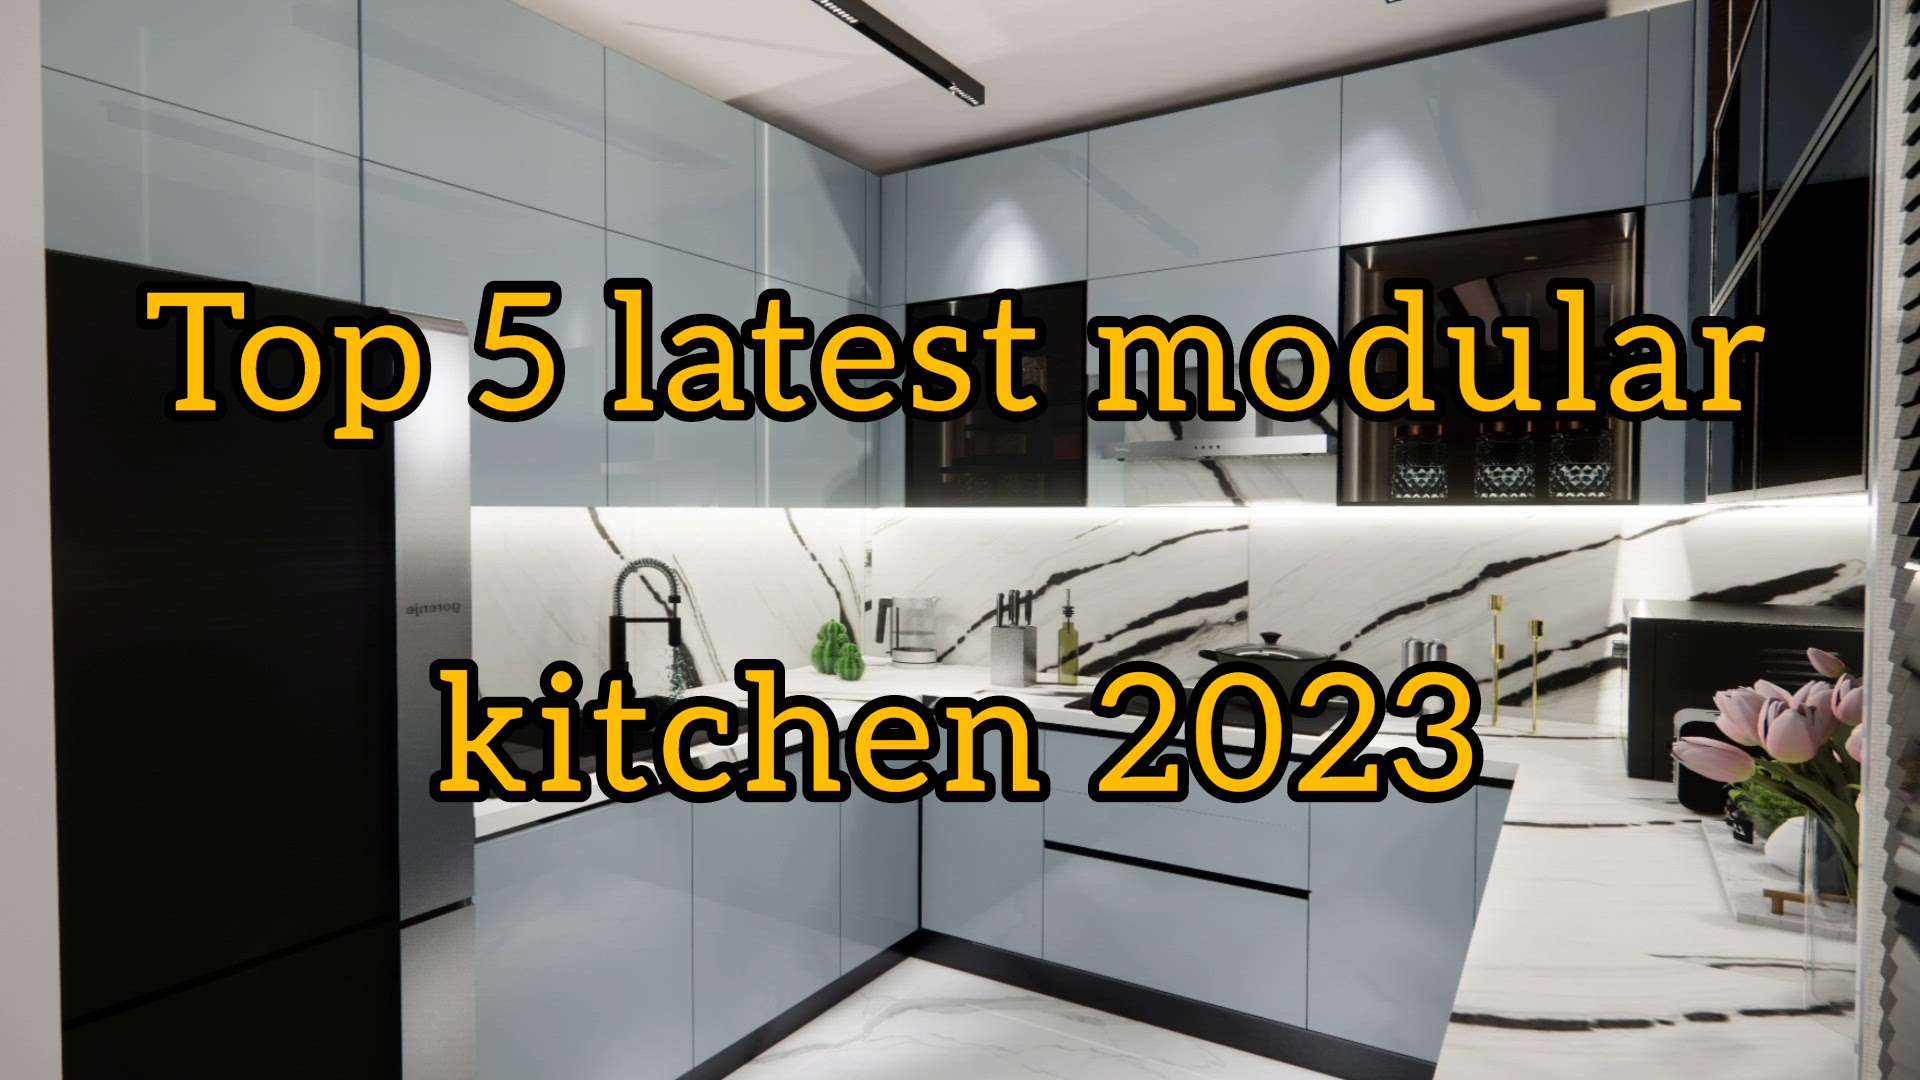 top 5 modular kitchen design
call us for interior design and consultancy - 8382937714
 #KitchenIdeas  #InteriorDesigner  #modulerkitchen  #KitchenIdeas  #LargeKitchen  #vastu